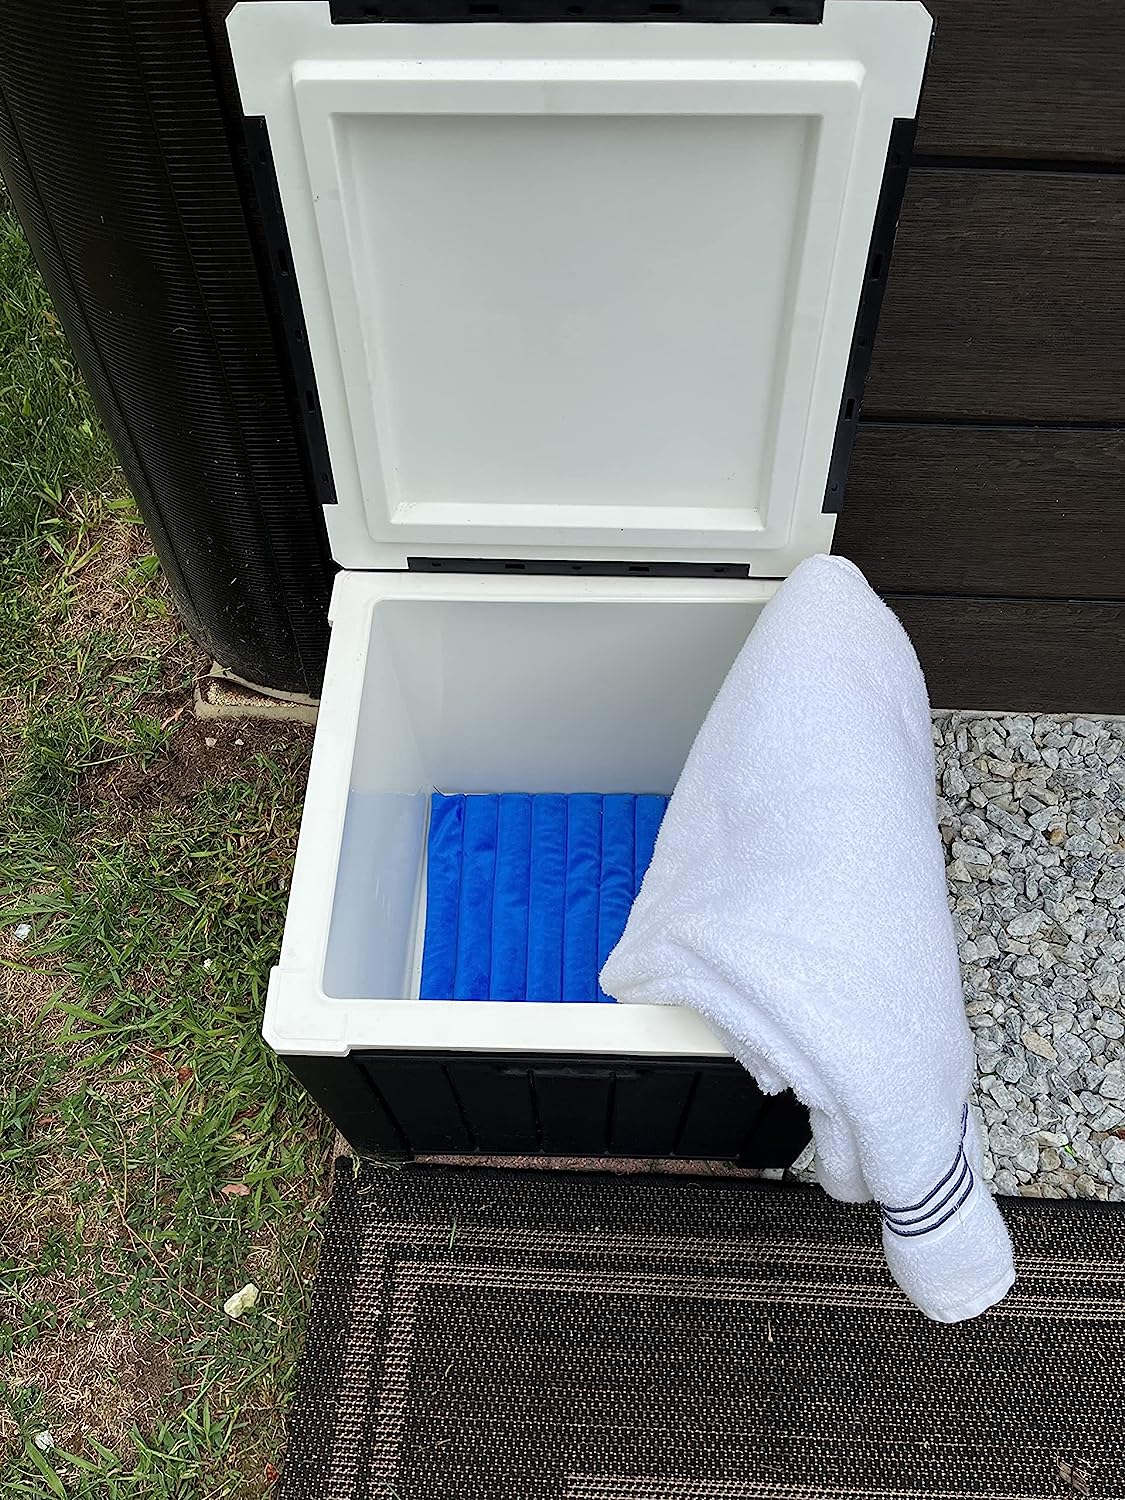 Spatender - Hot Tub Towel and Robe Warmer &amp; Cooler Deck Box